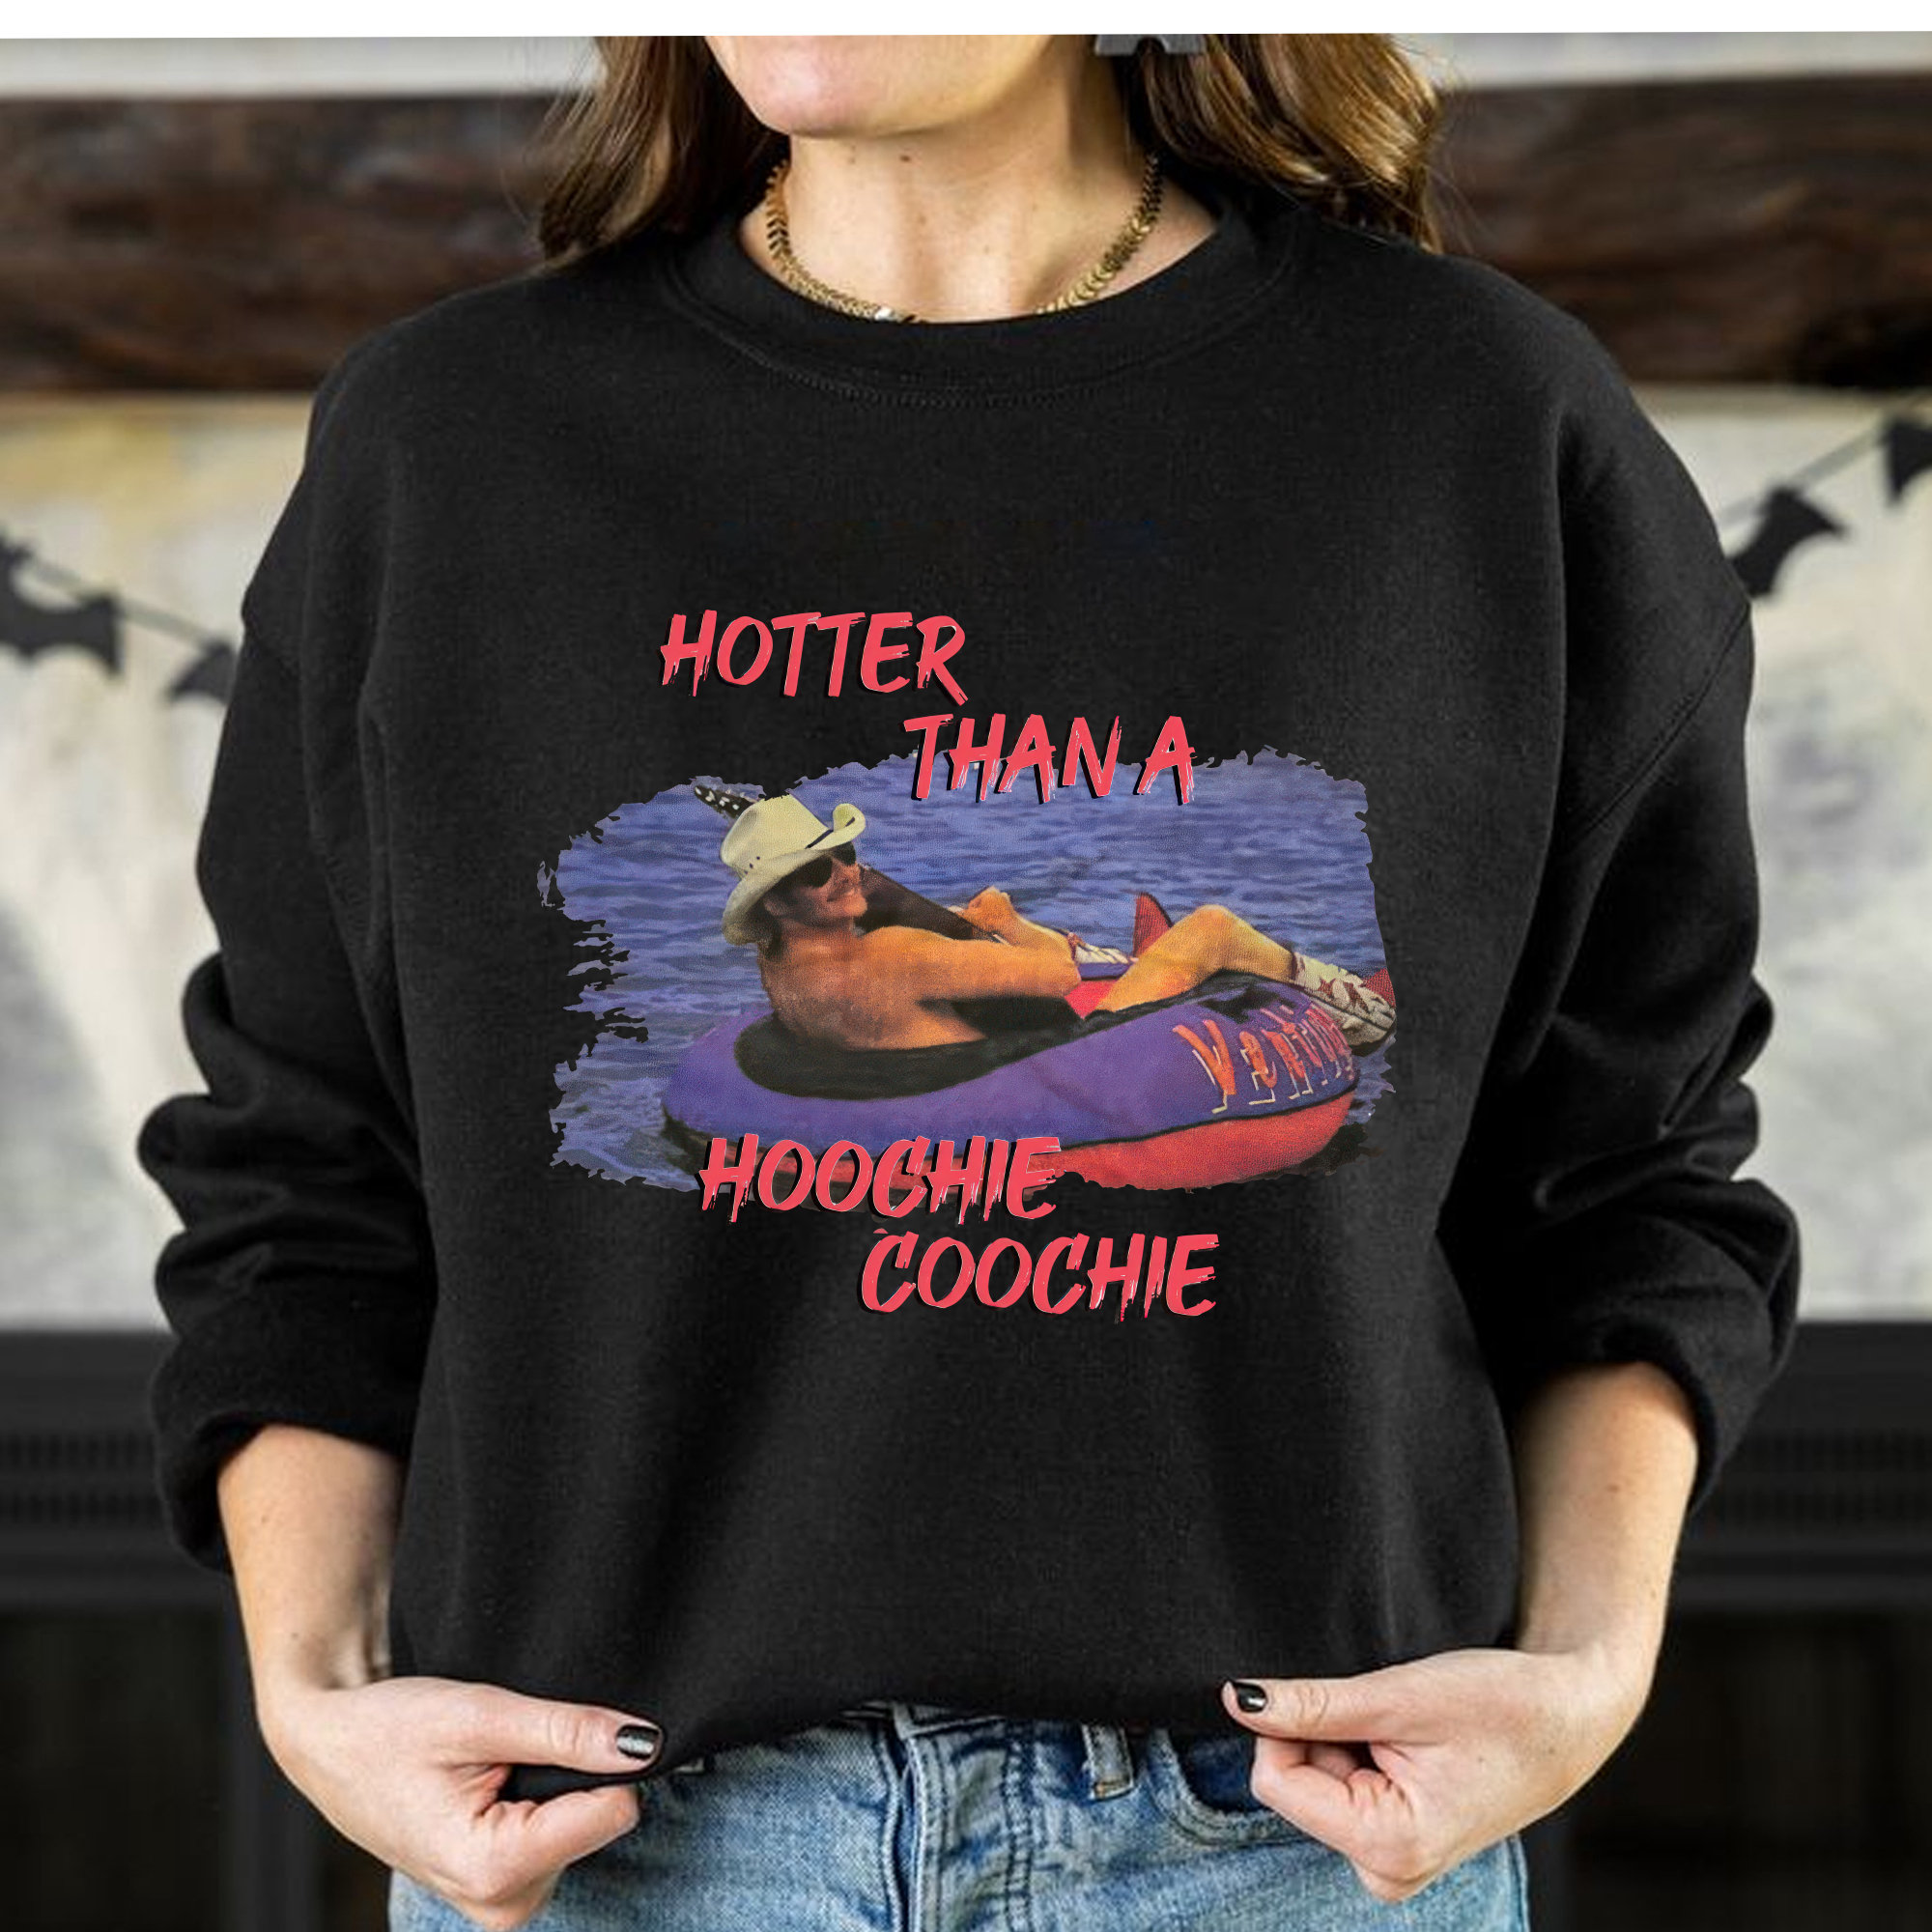 Hotter than a hoochie coochie can koozie – 417 Designs LLC